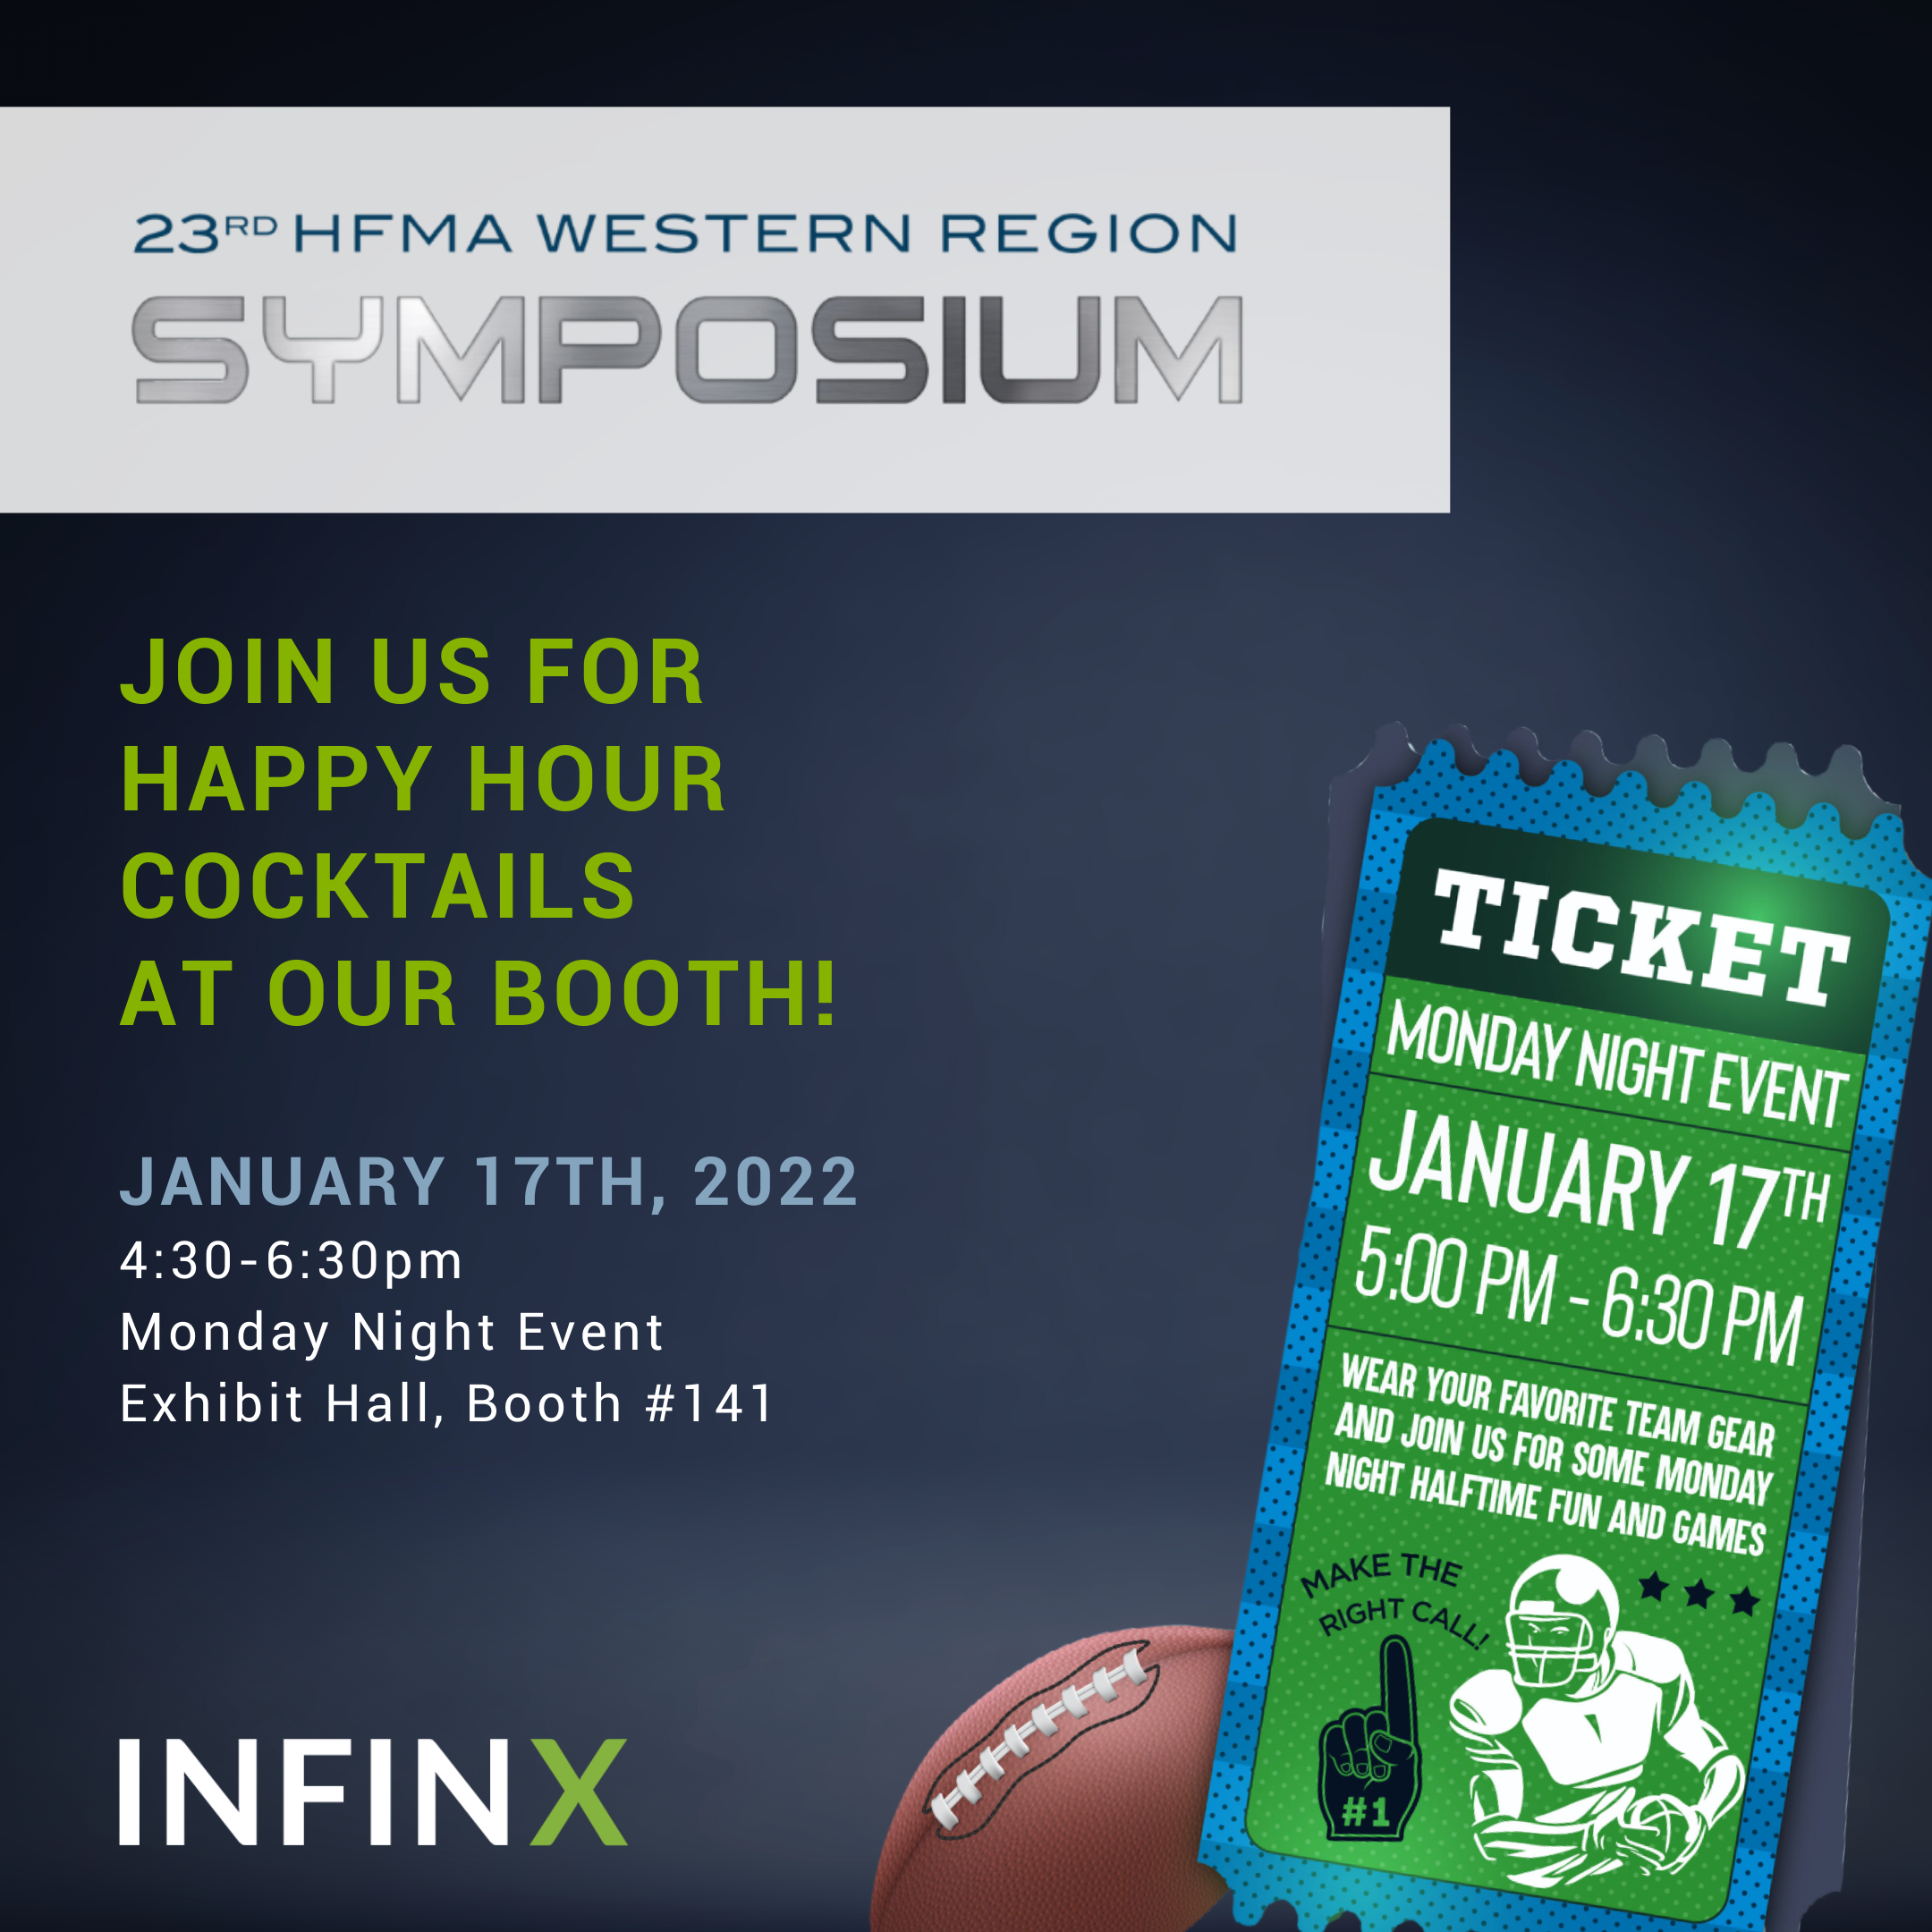 Infinx HFMA Western Region Symposium Monday Night Event